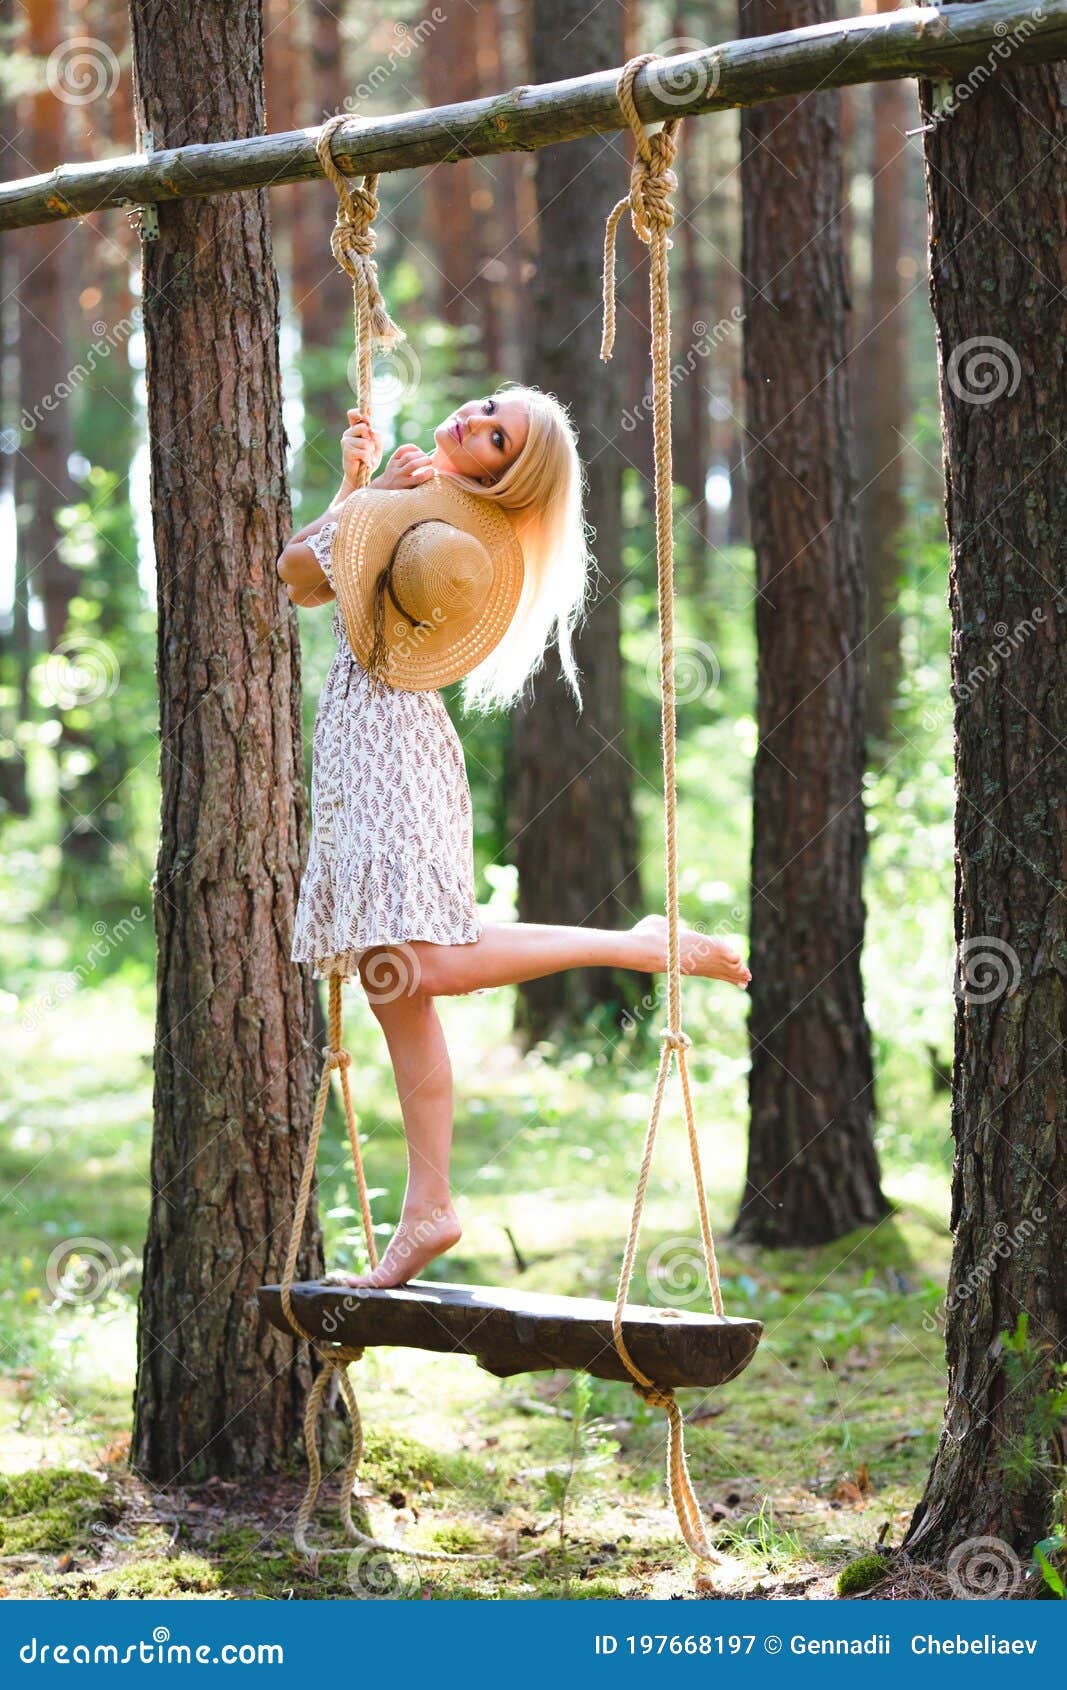 https://thumbs.dreamstime.com/z/blond-woman-slender-beautiful-naked-legs-standing-rope-swing-blond-woman-slender-beautiful-naked-legs-straw-197668197.jpg